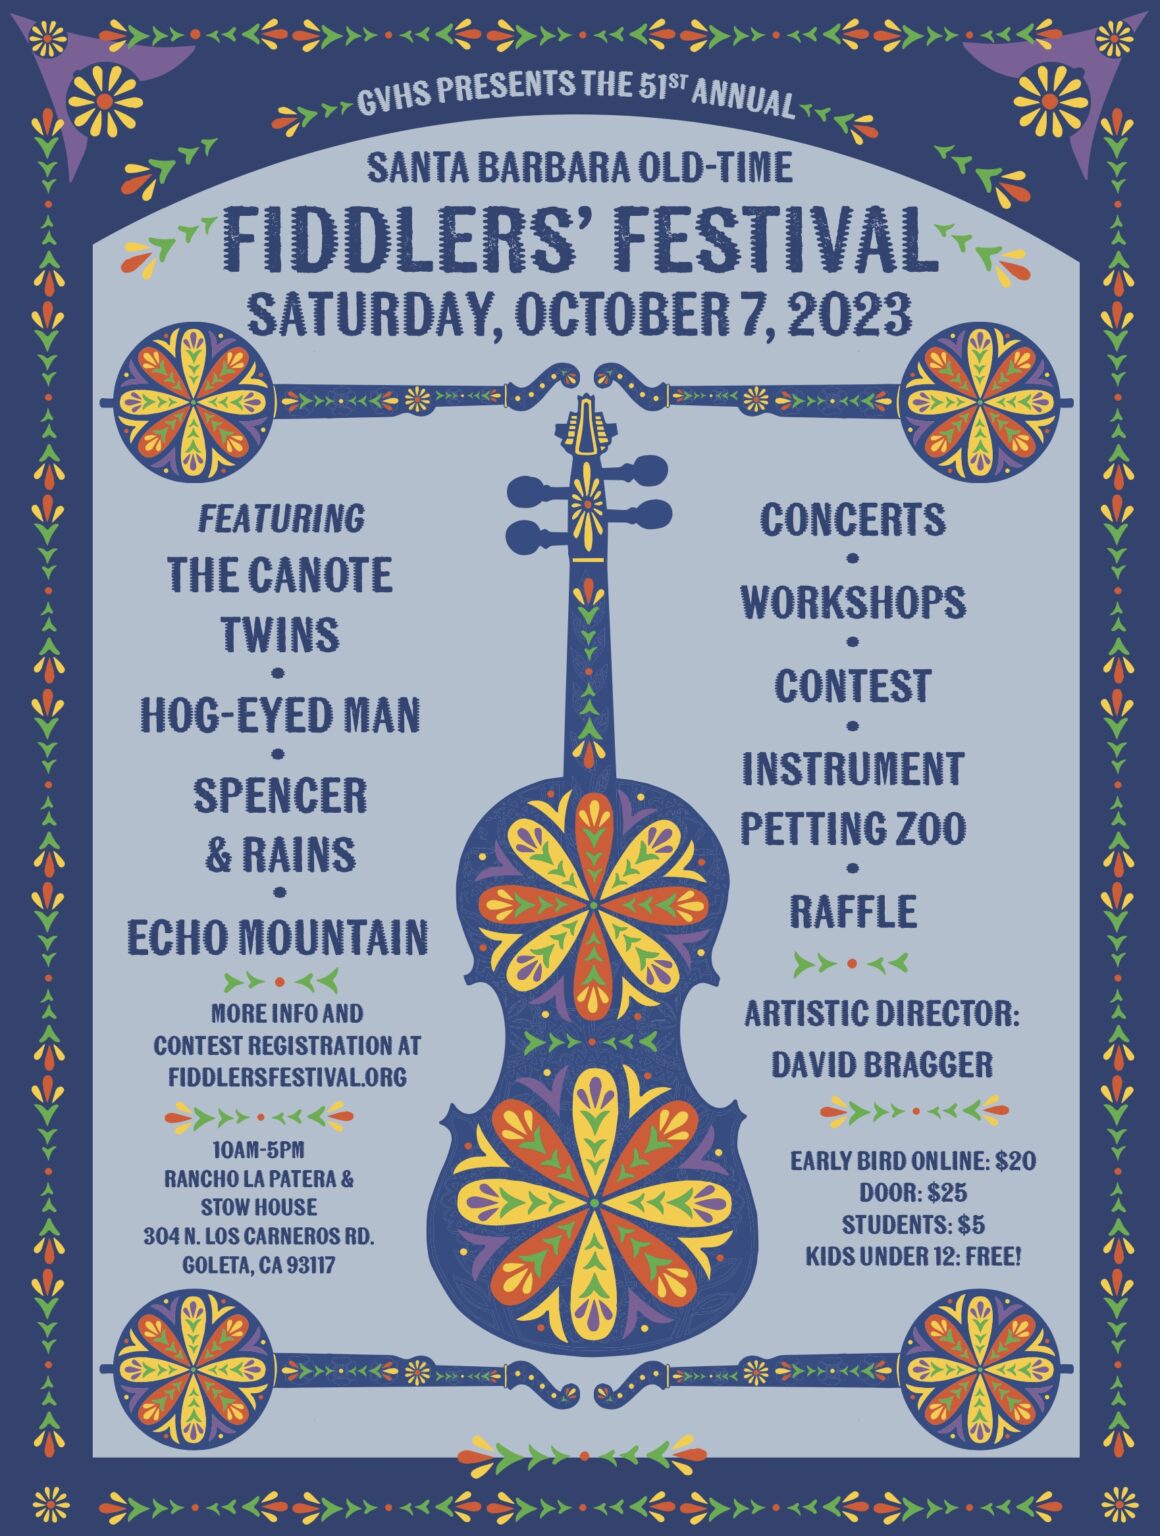 Santa Barbara Fiddlers Festival 2023 poster